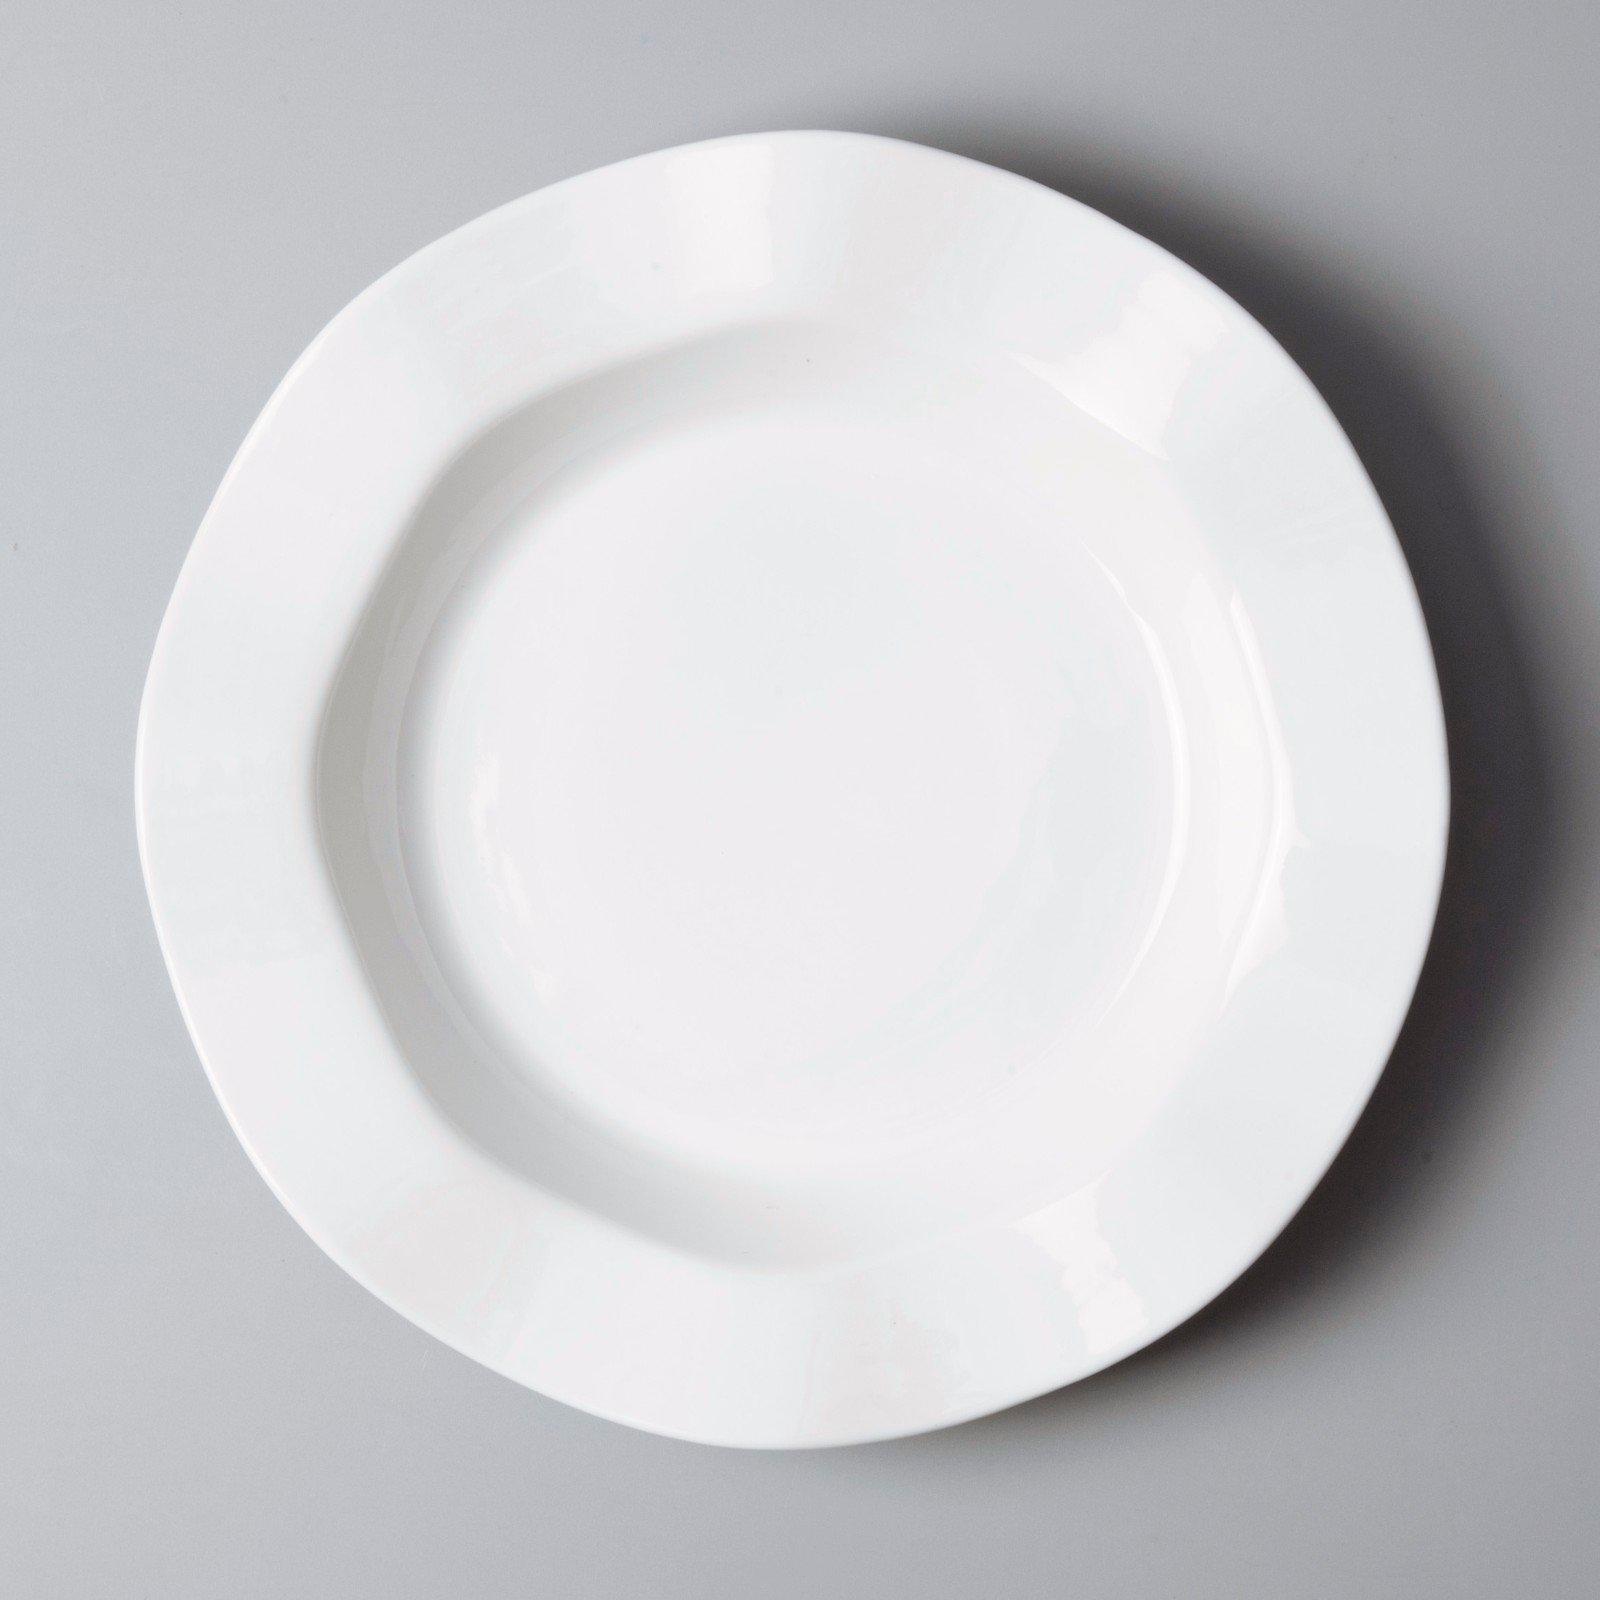 irregular restaurant dining ware stock series for home-3